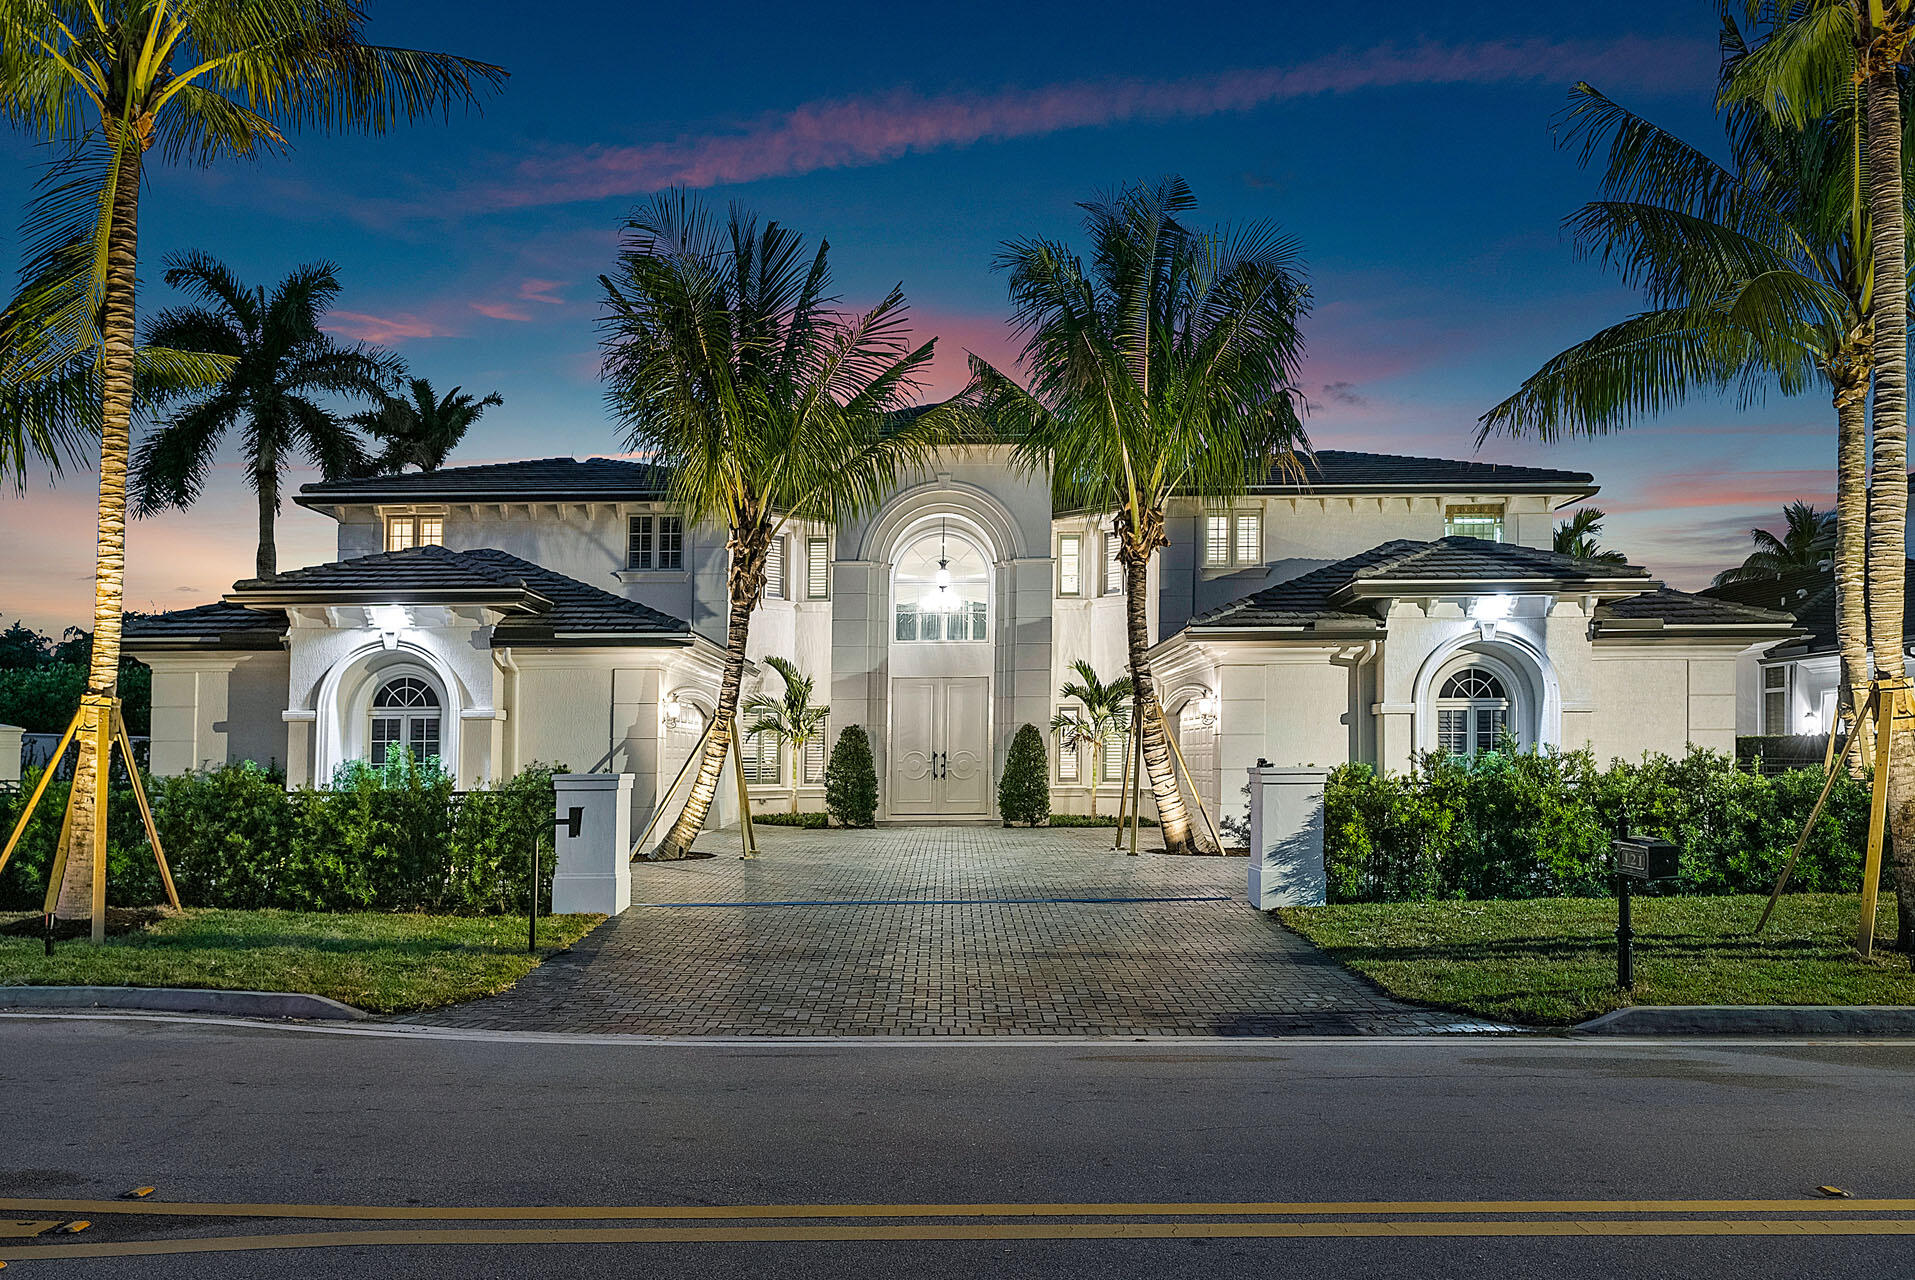 121 Royal Palm Way, Boca Raton, Palm Beach County, Florida - 6 Bedrooms  
6.5 Bathrooms - 